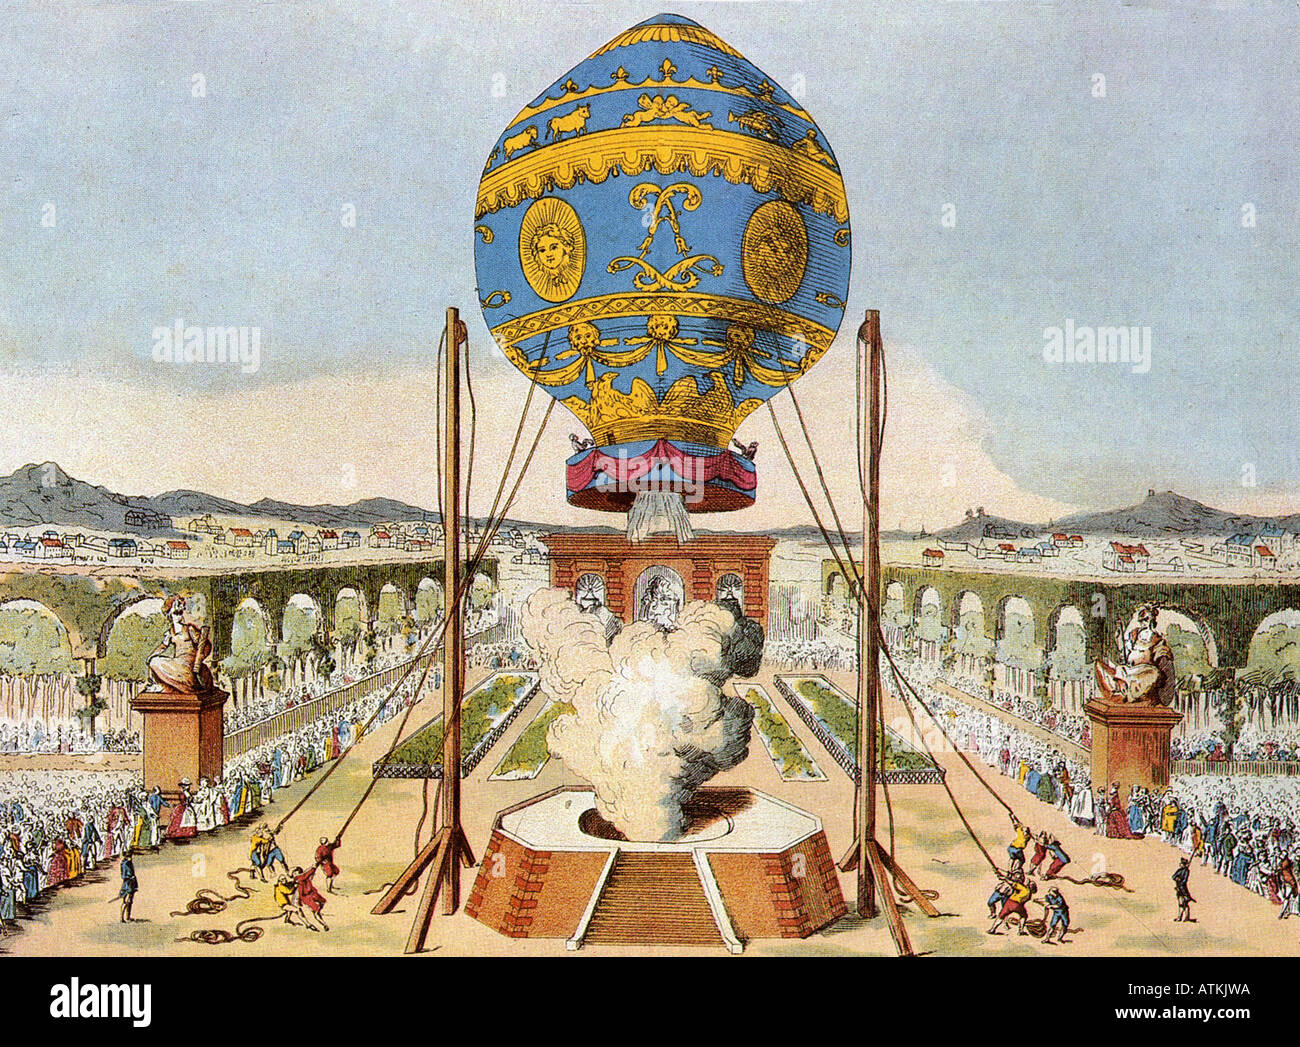 ETIENNE MONTGOLFIER launches his hotair ballon in Paris in 1783 - see  Description below for details Stock Photo - Alamy